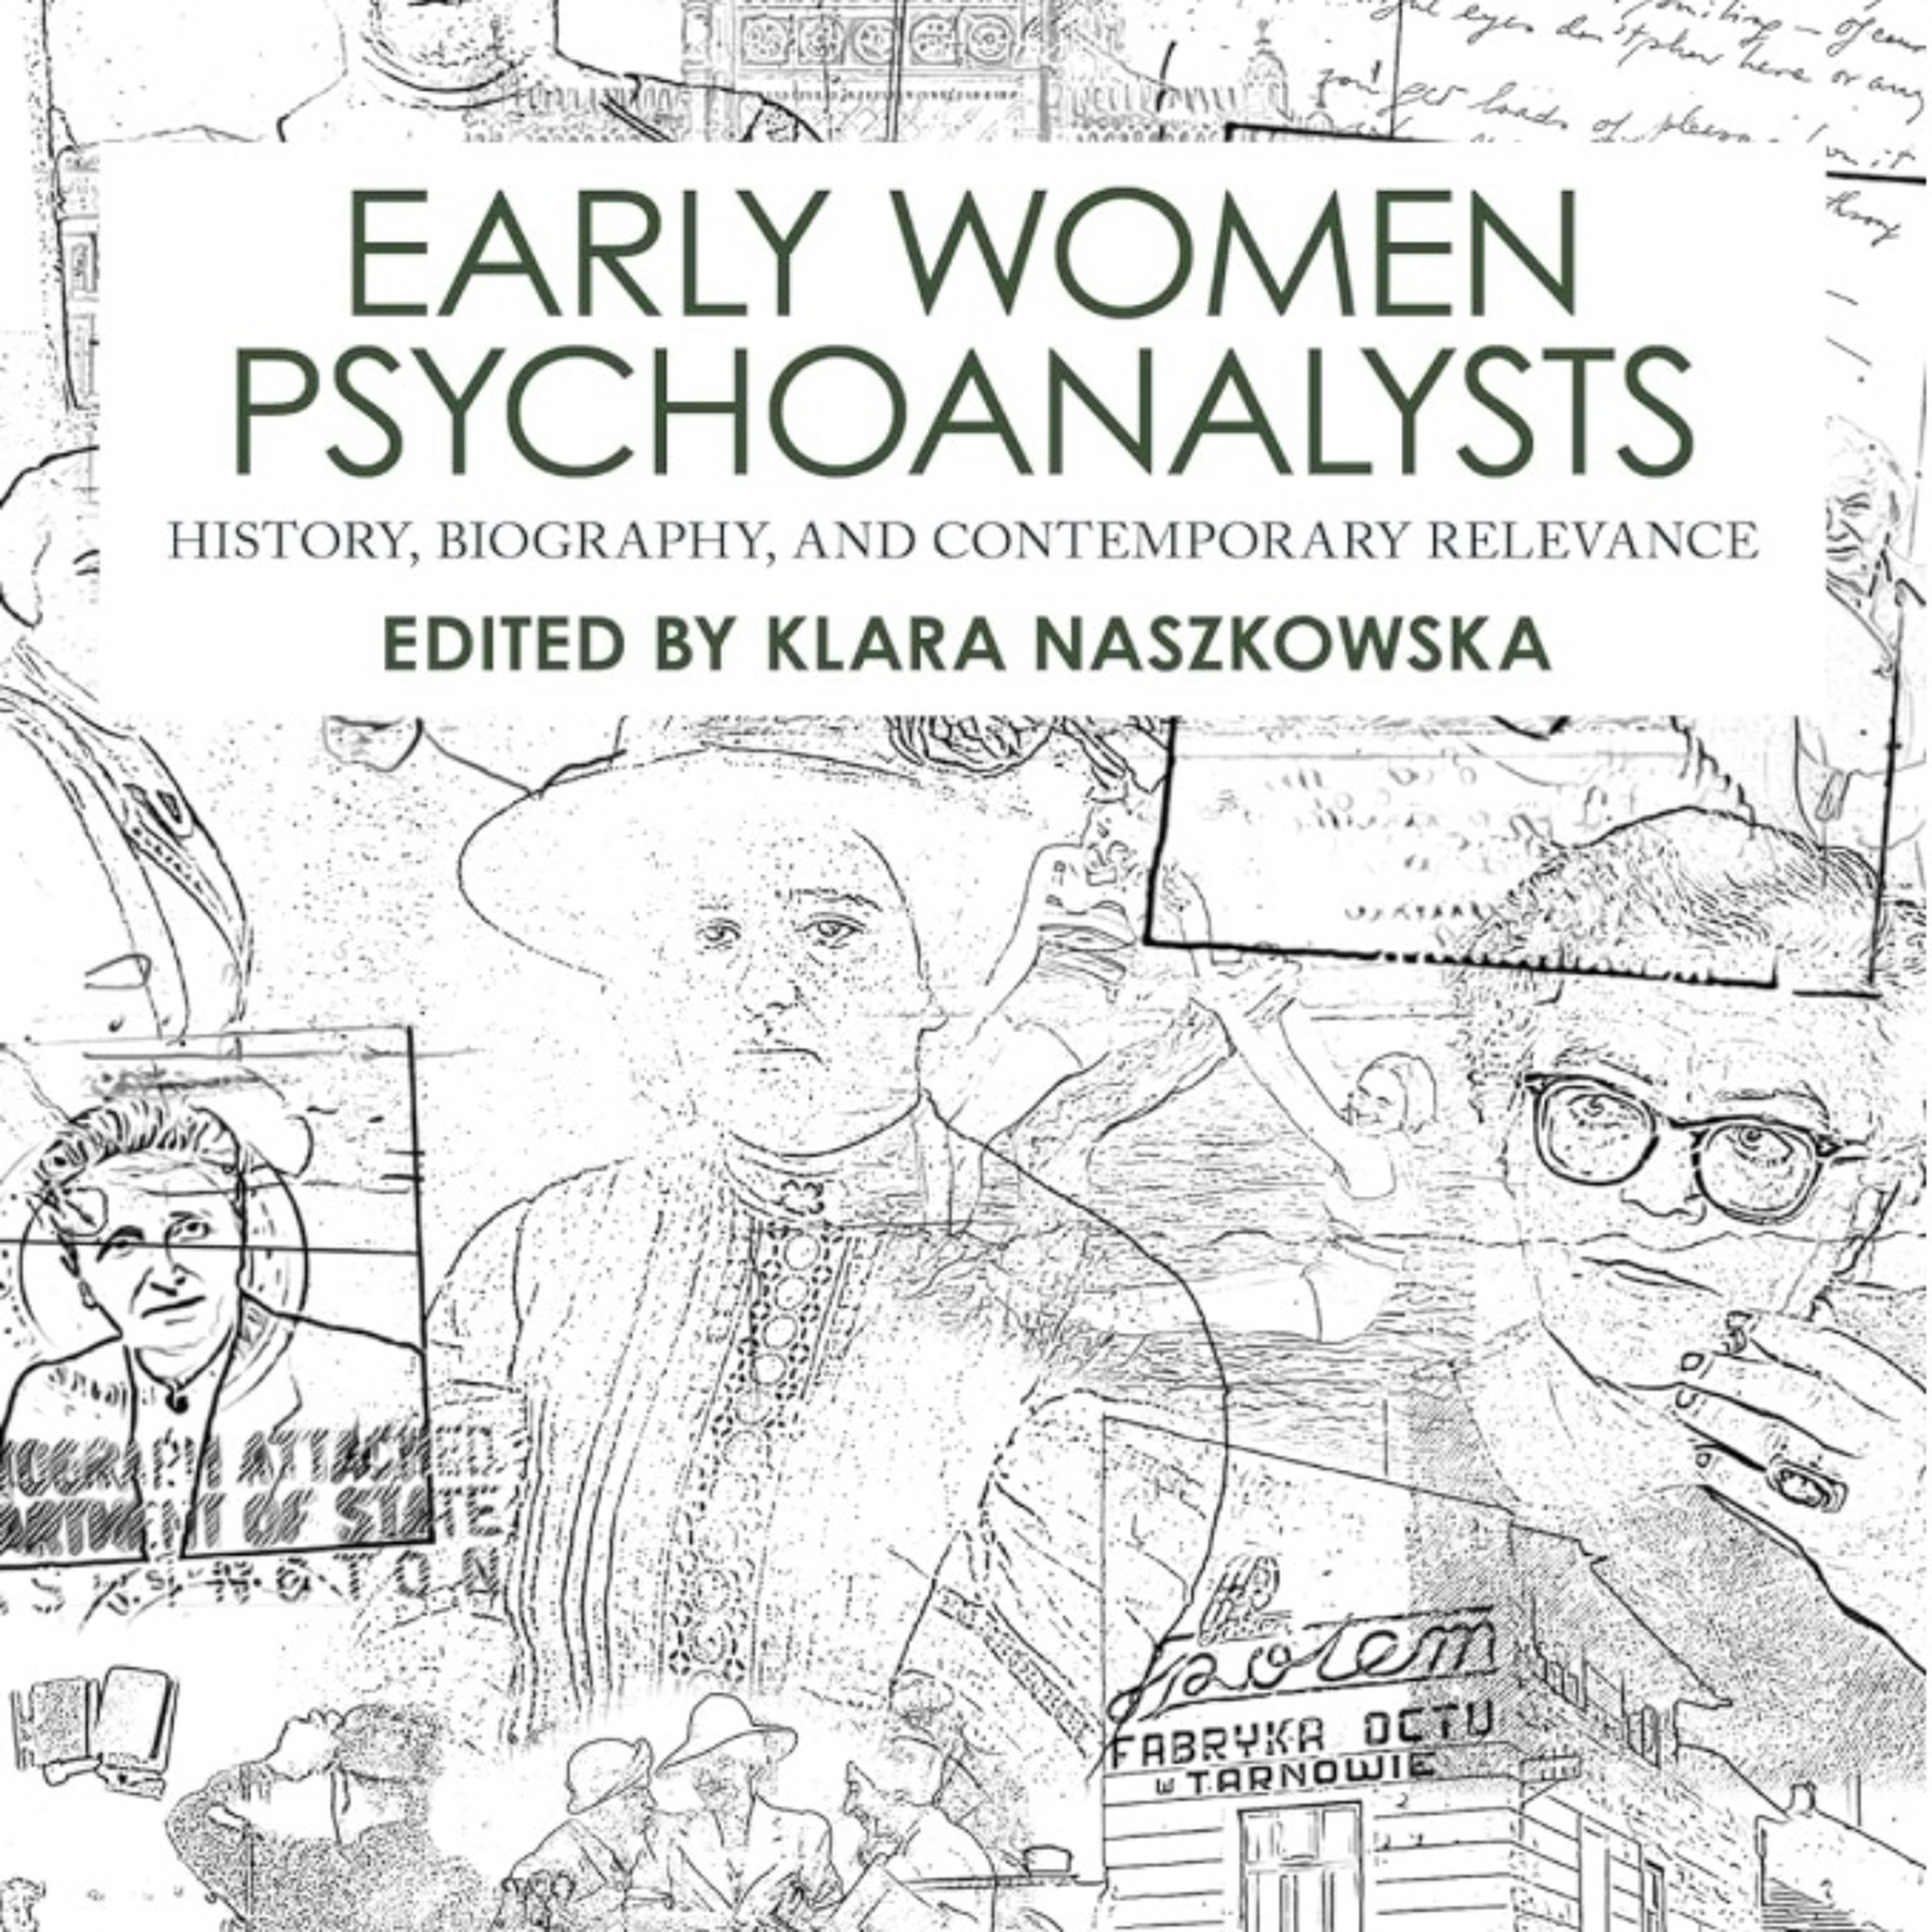 RU288: DR KLARA NASZKOWSKA ON EARLY WOMEN PSYCHOANALYSTS